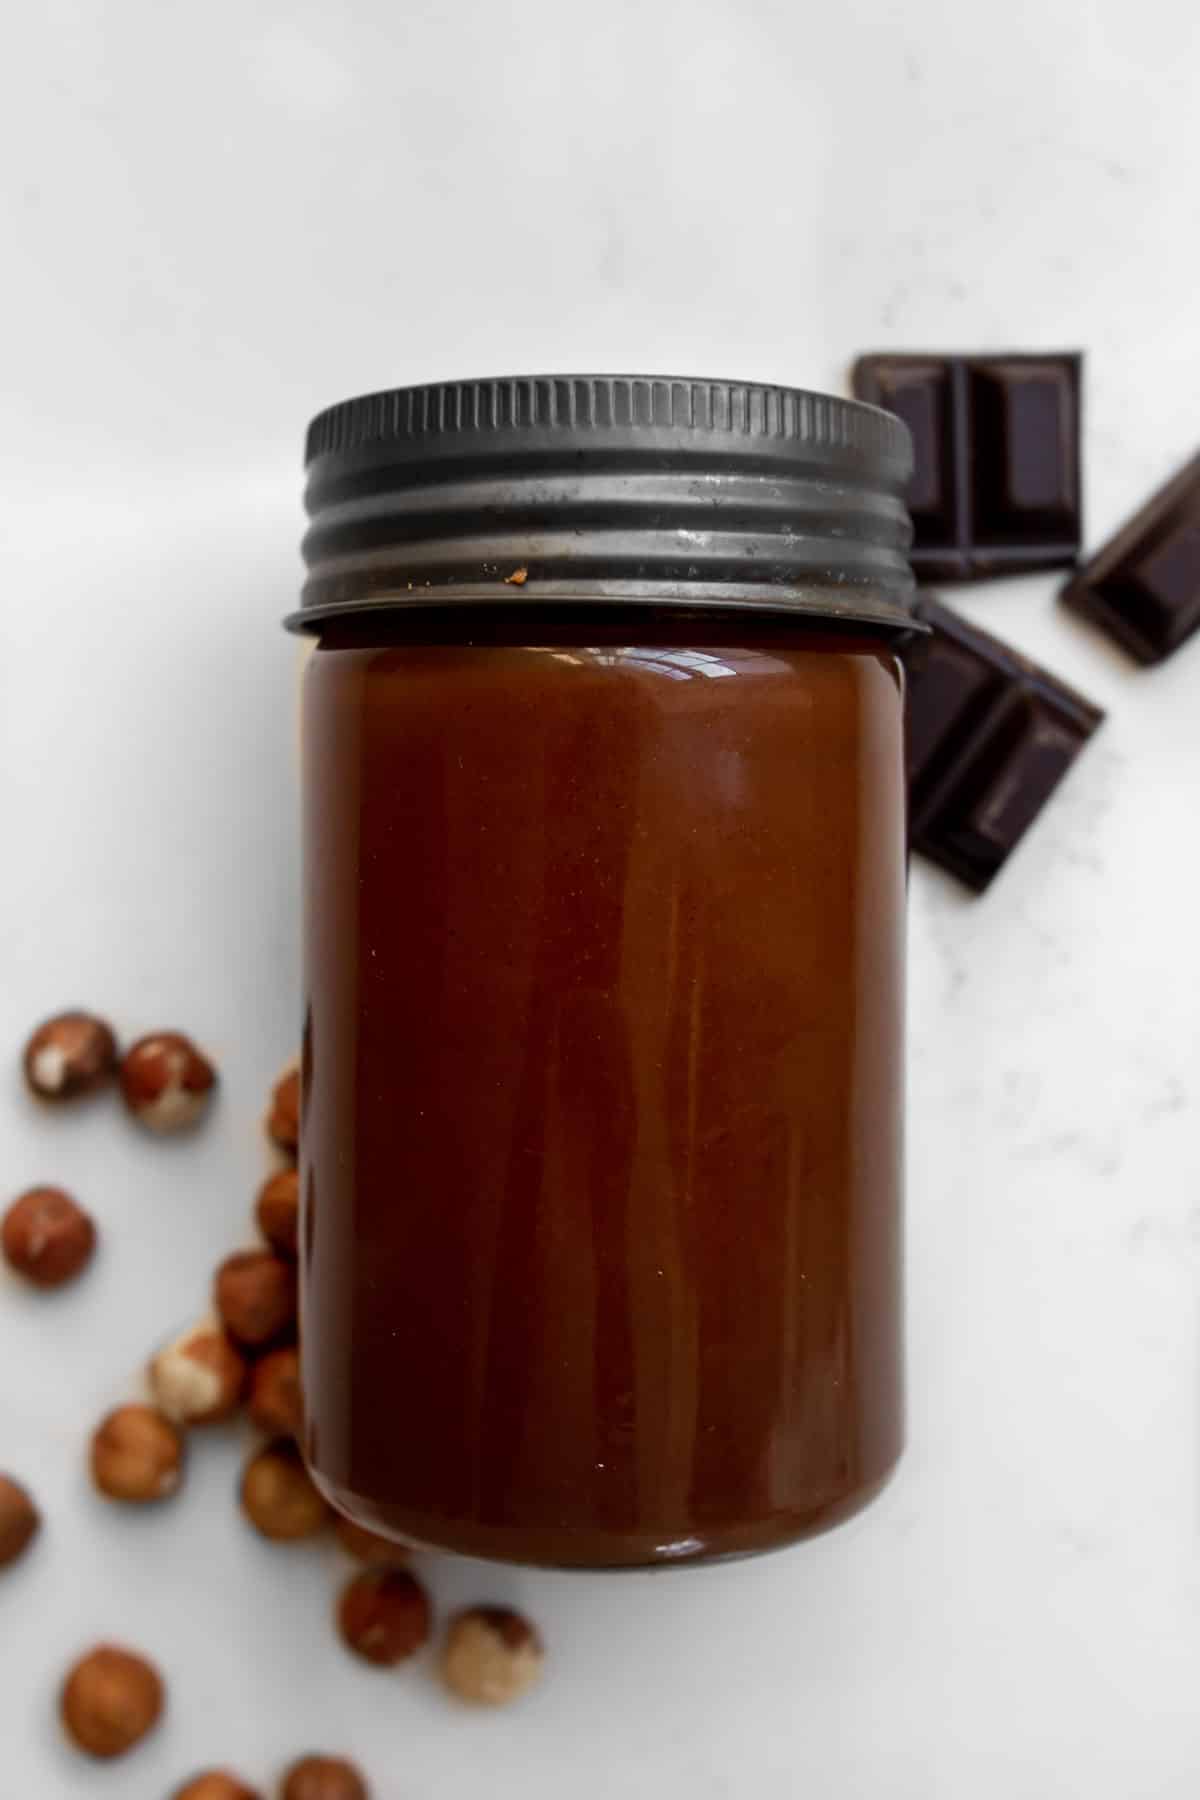 Jar of homemade chocolate hazelnut spread on a counter with hazelnuts and chocolate around it.